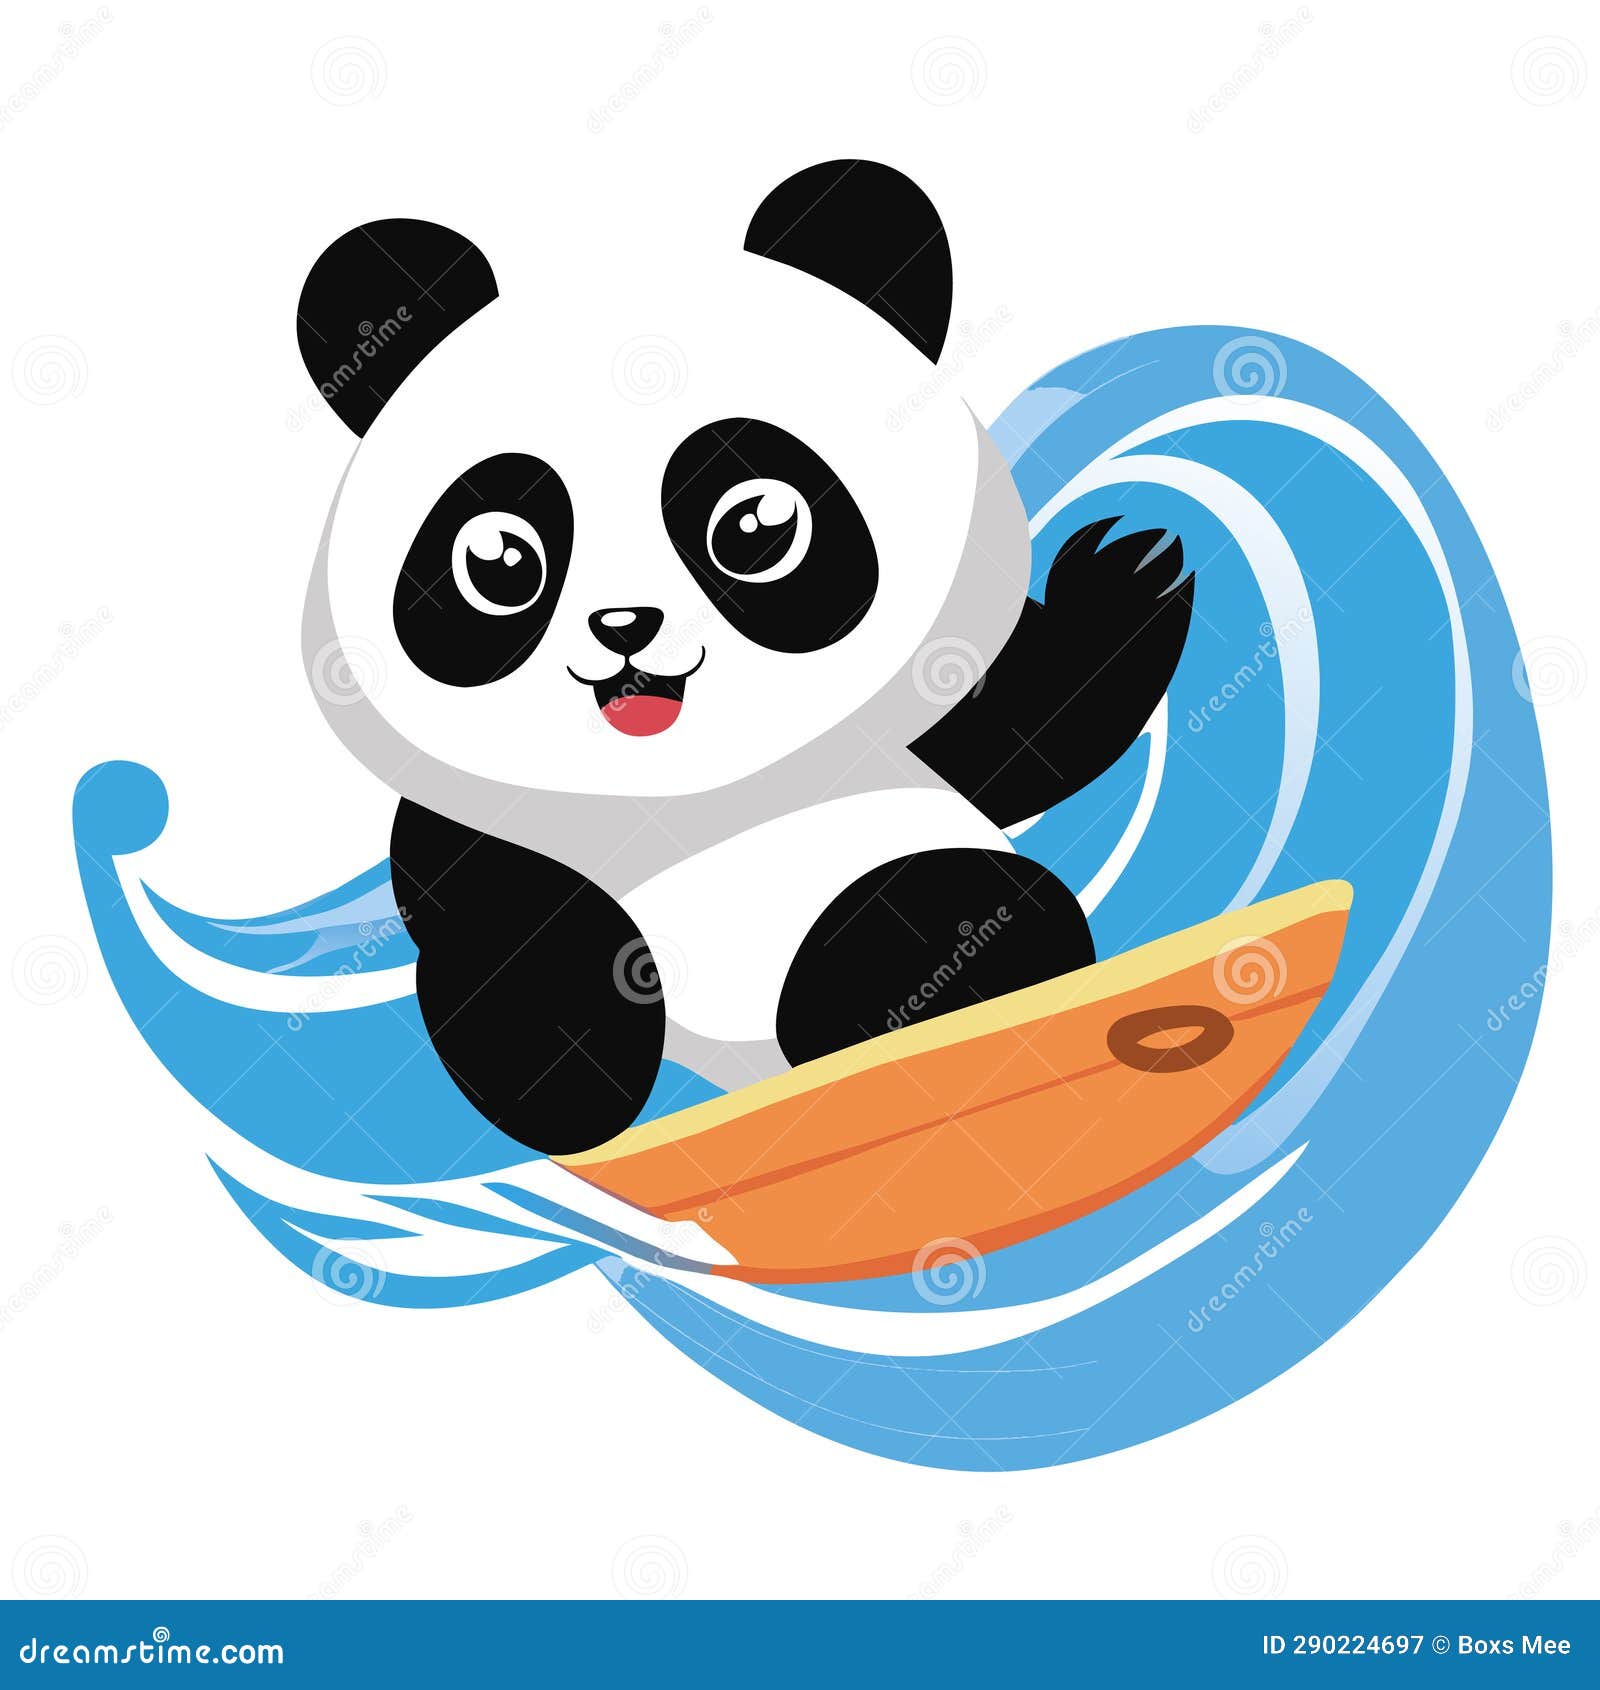 Panda Surfing On The Wave Vector Illustration In Cartoon Style Stock